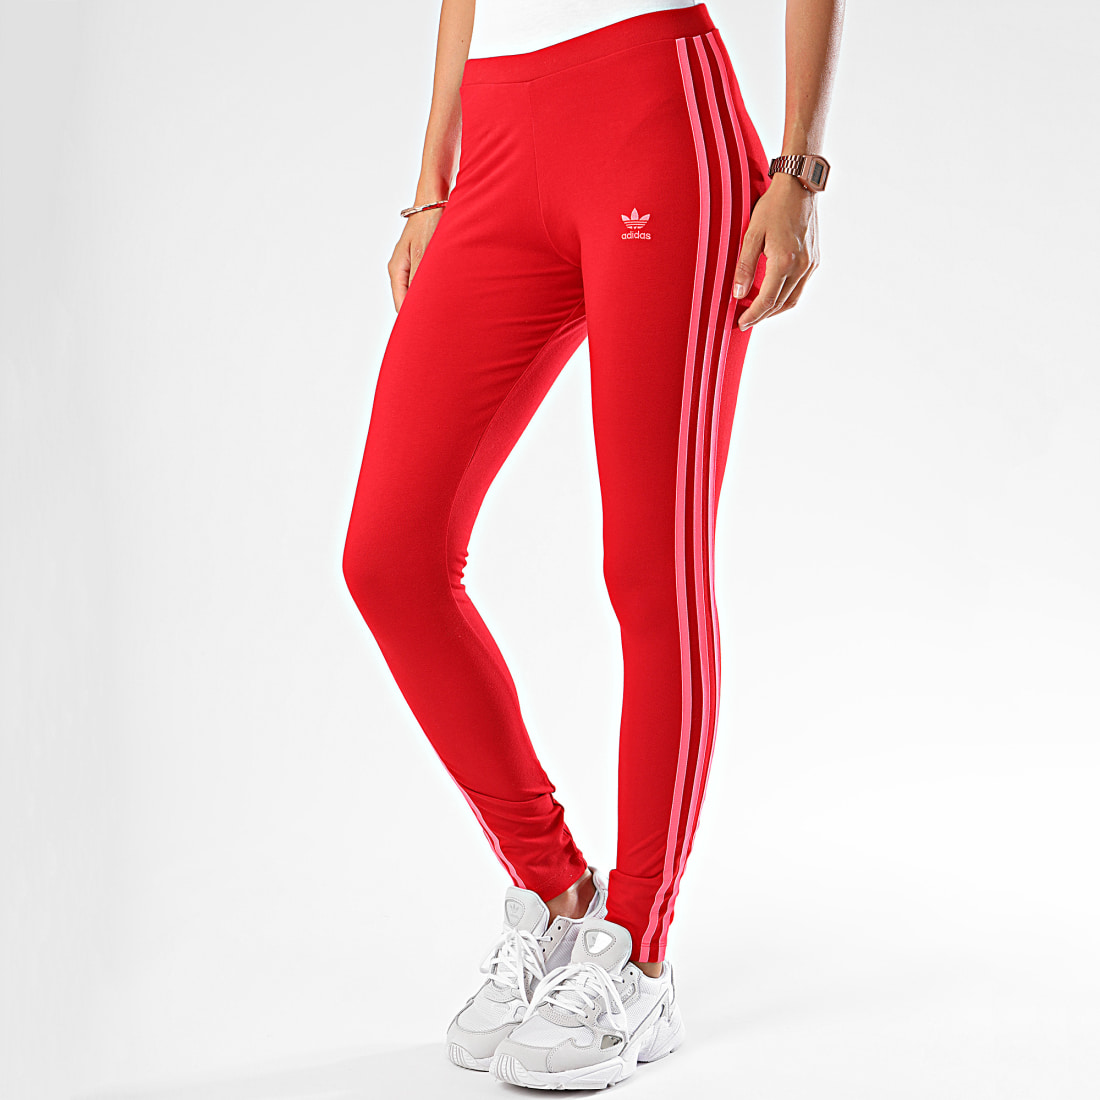 Reprimir imperdonable Menos que Adidas Originals - Legging Femme 3 Stripes Tight ED7577 Rouge Corail Fluo -  LaBoutiqueOfficielle.com